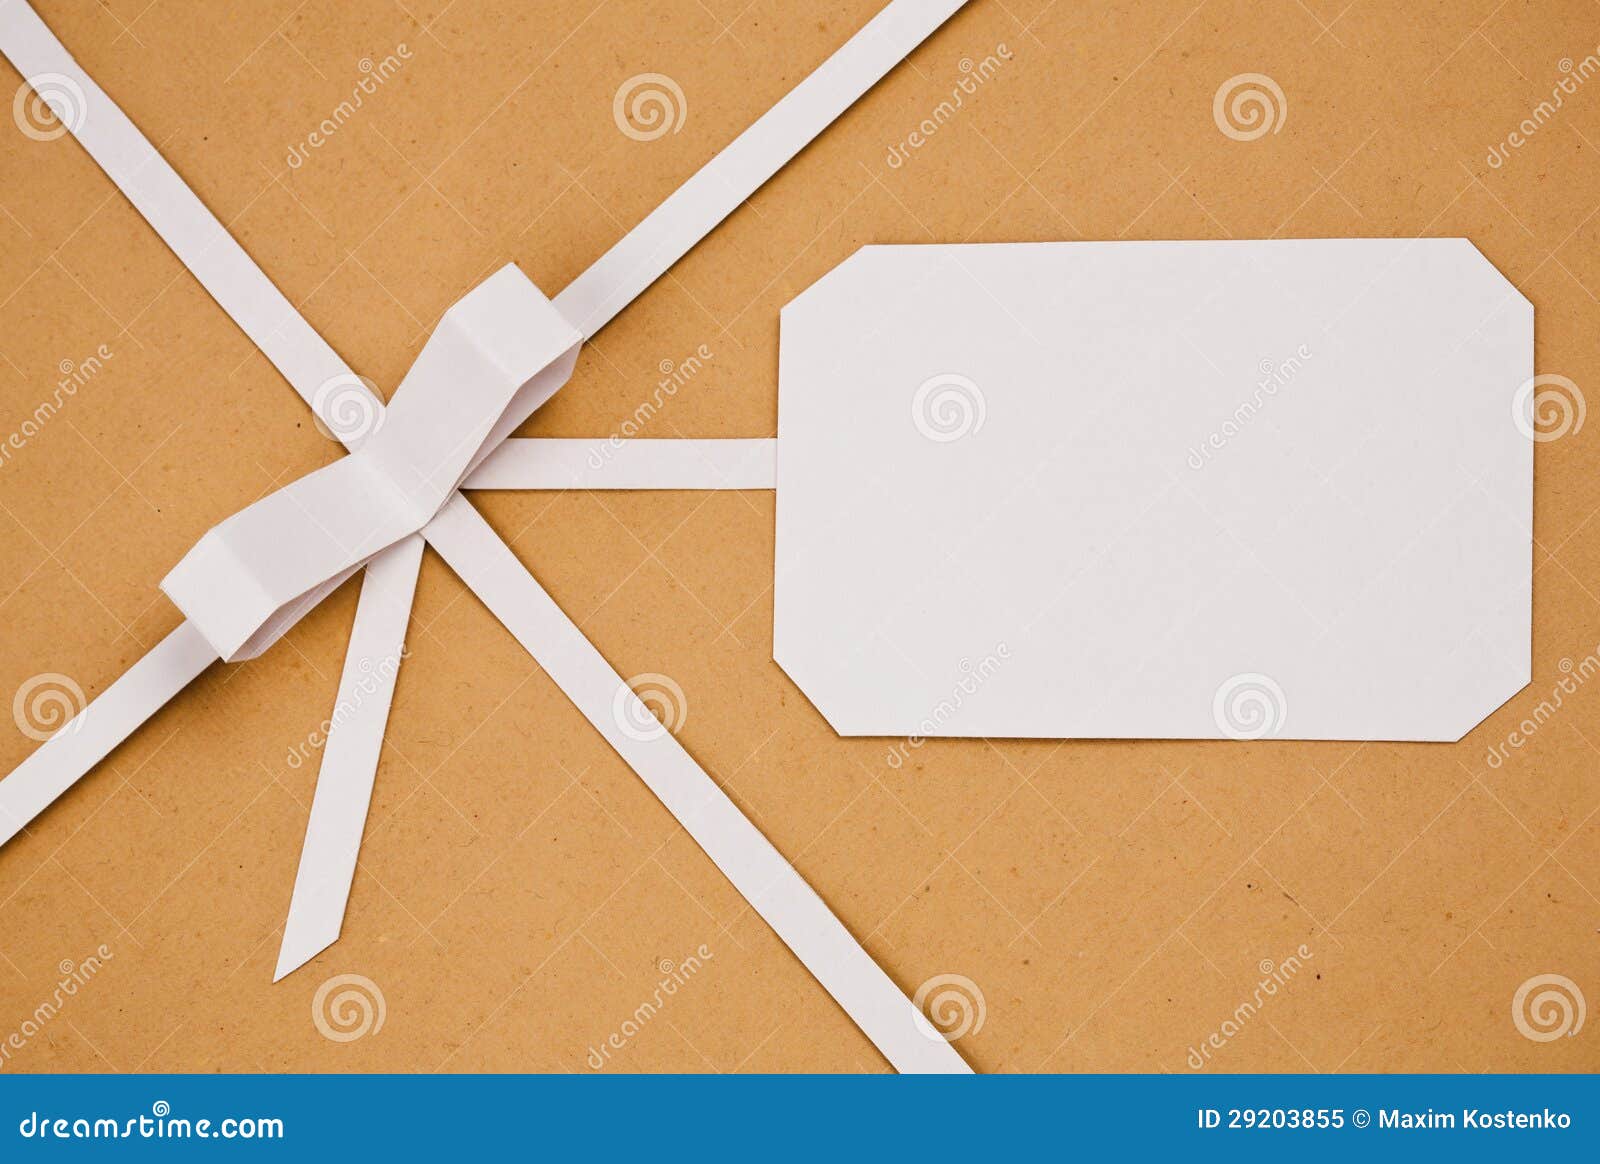  - hand-made-ribbon-bow-blank-tag-paper-29203855